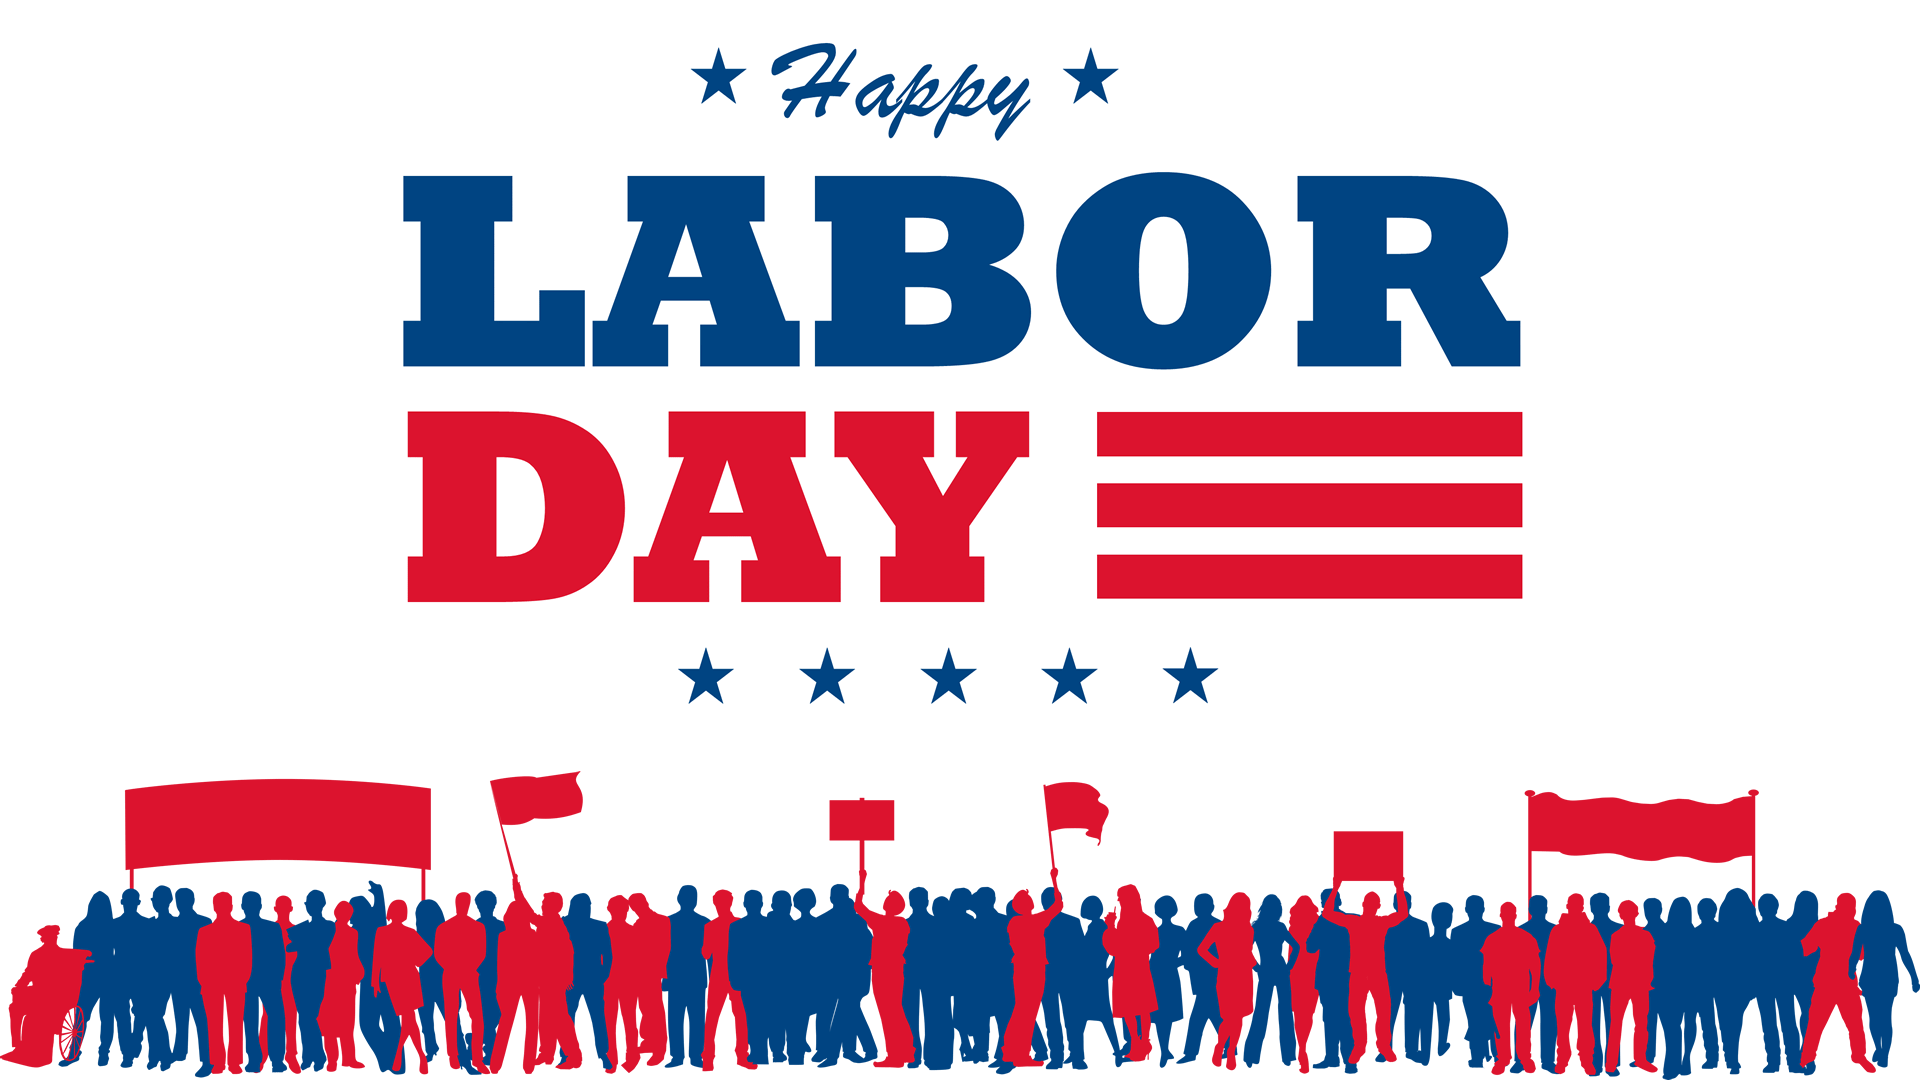 Happy Labor Day from NPI!